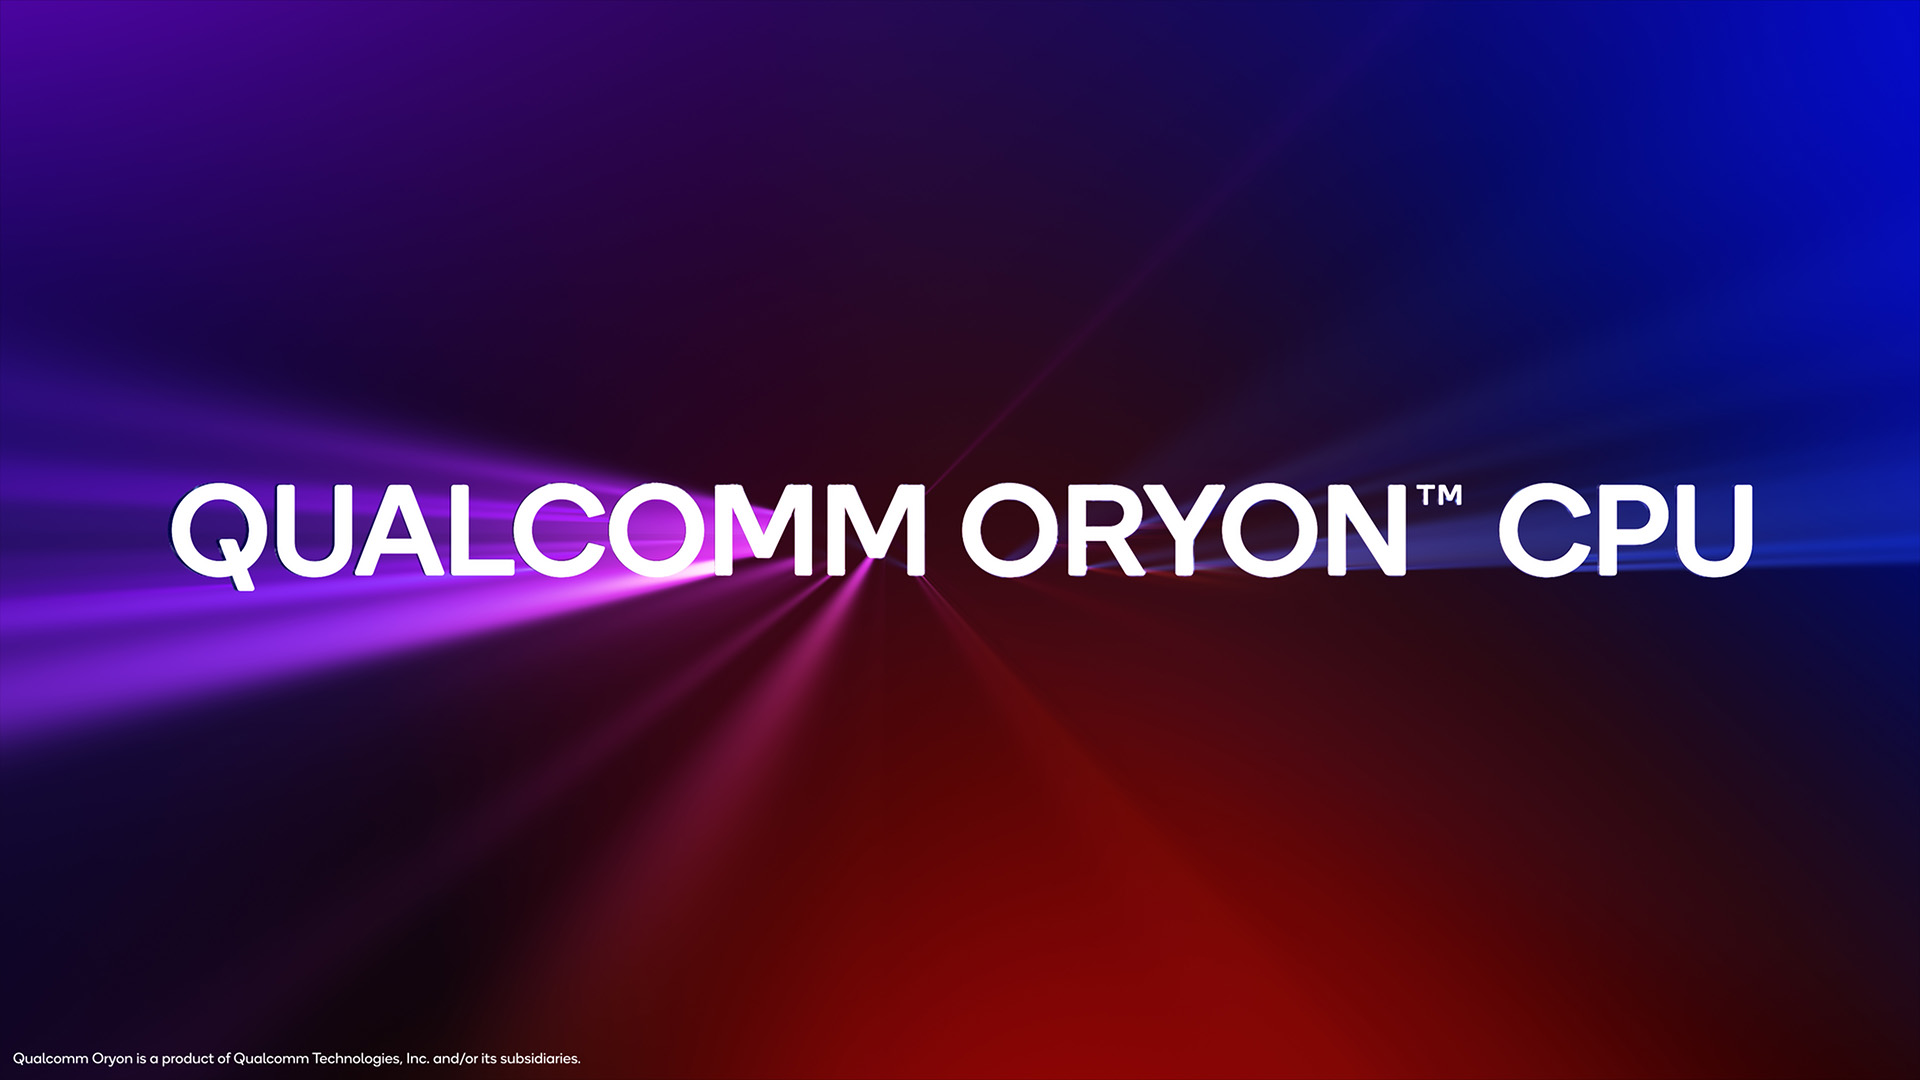 Qualcomm Oryon CPU